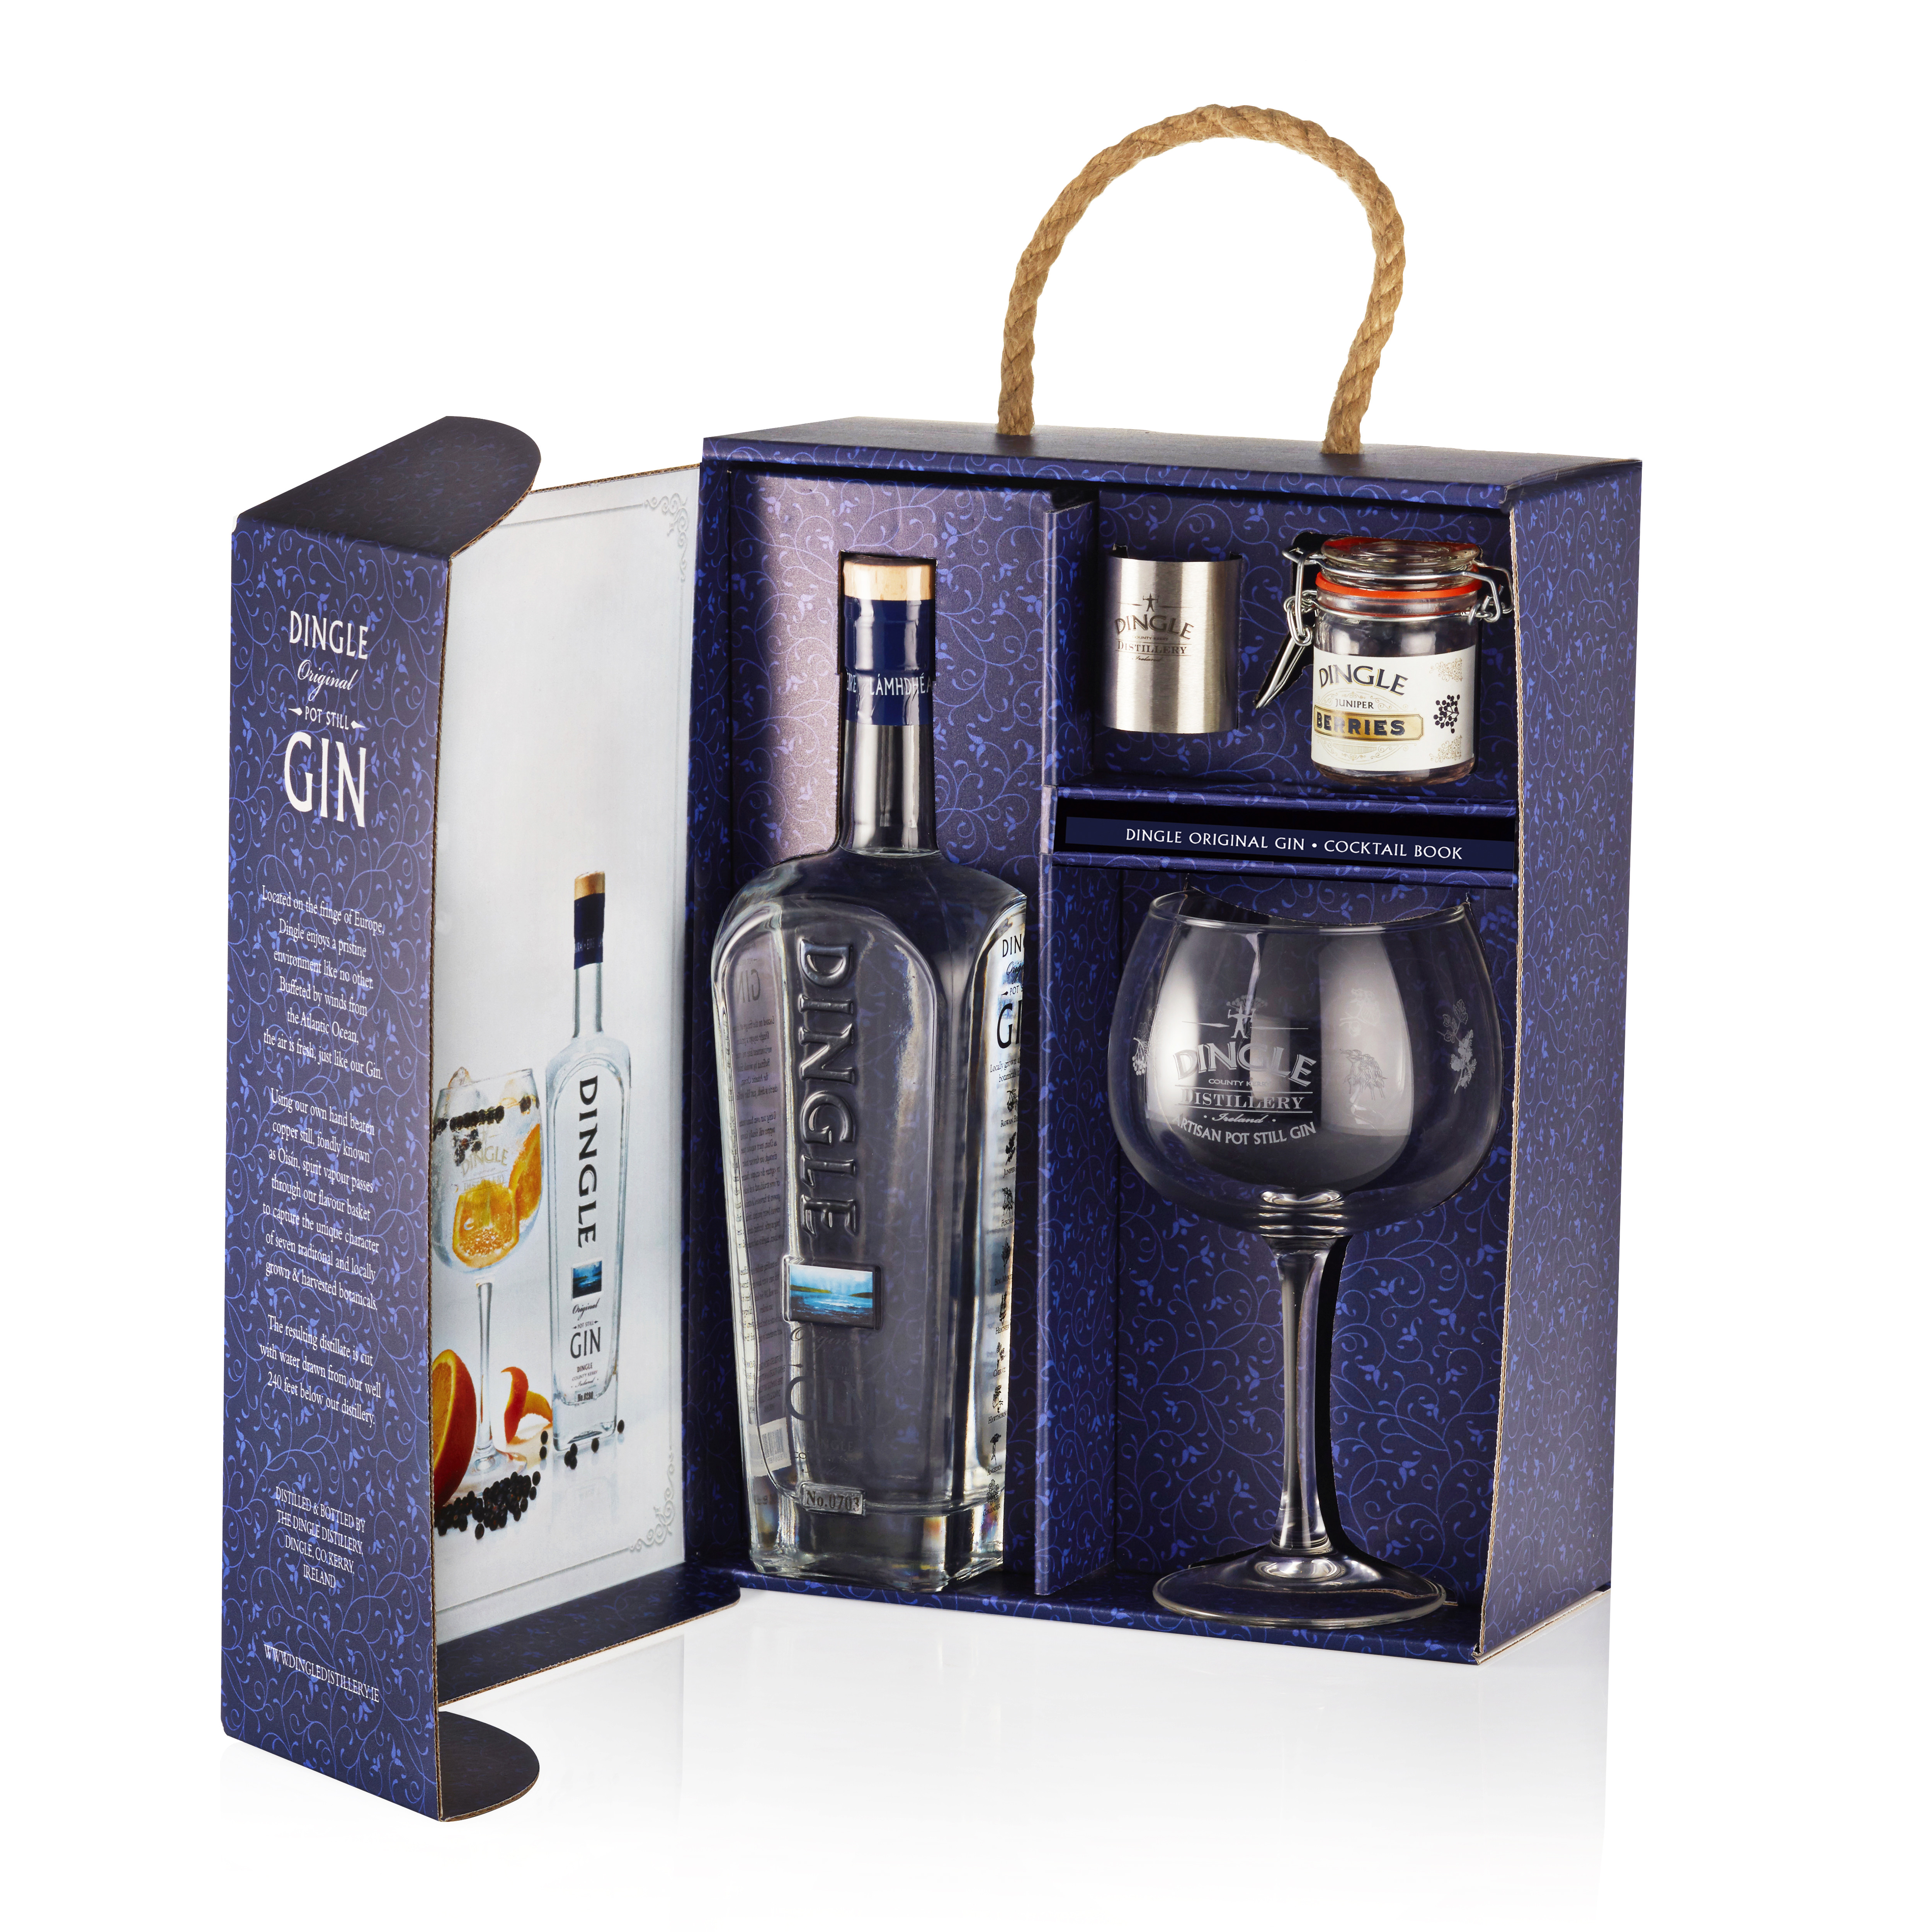 Myers Cocktail Iv Bag for Sale Dingle Gin Gift Set